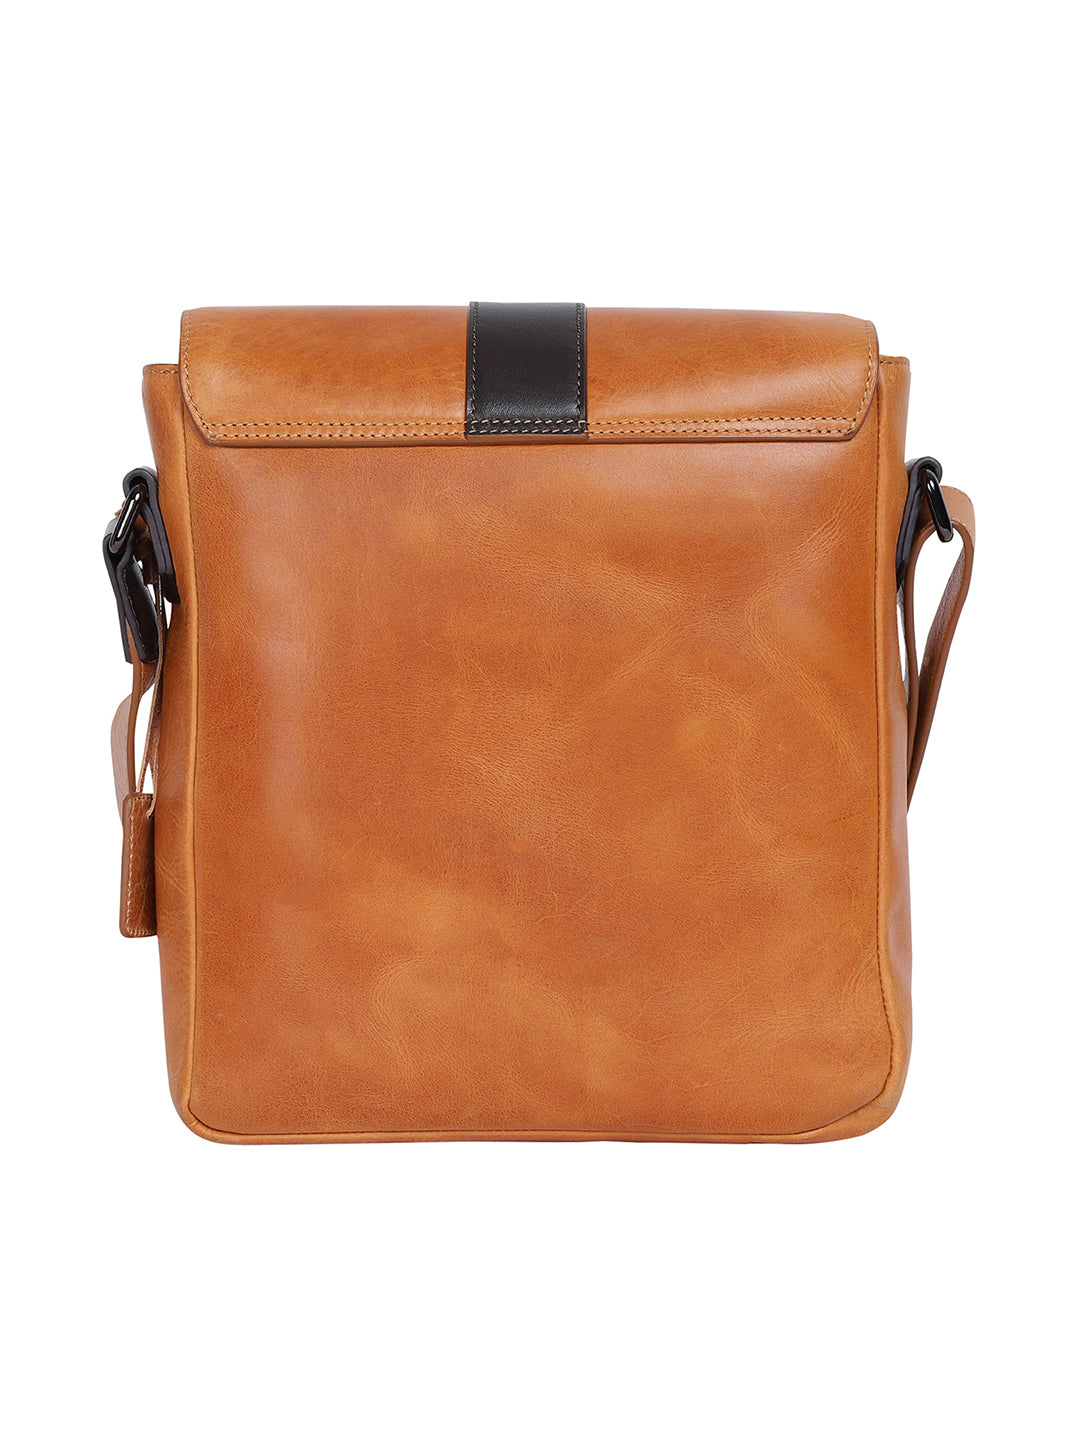 BAGATT Light Brown Leather Messenger Bag